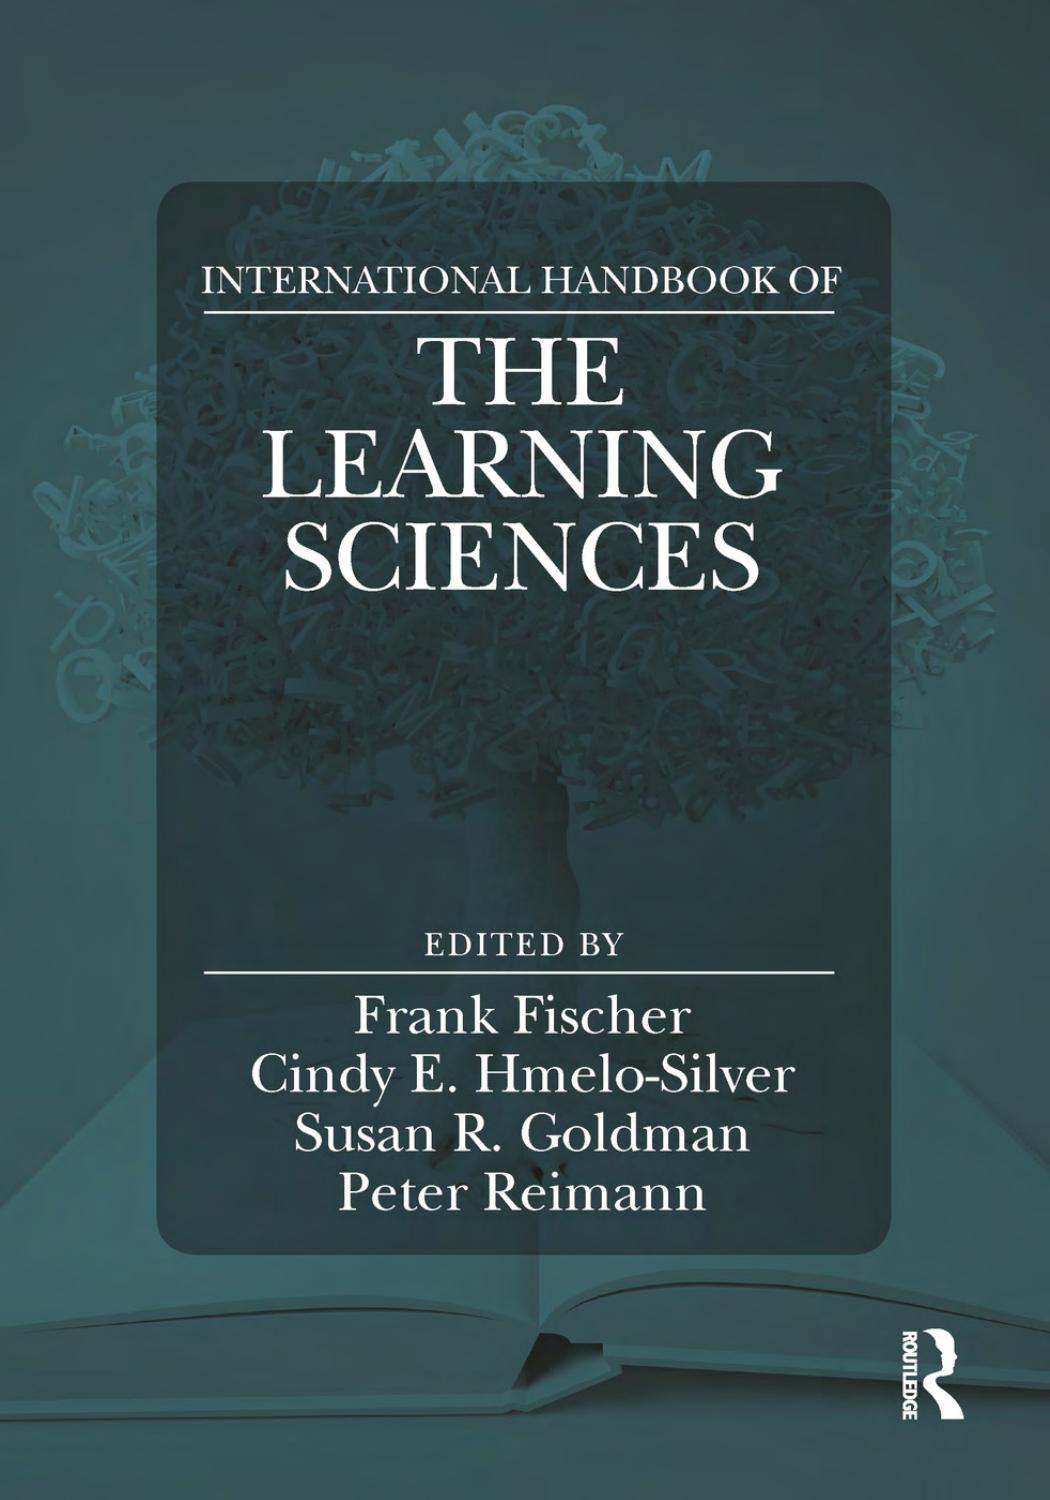 (eBook PDF)International Handbook of the Learning Sciences 1st Edition by Cindy E. Hmelo-Silver,Susan R. Goldman